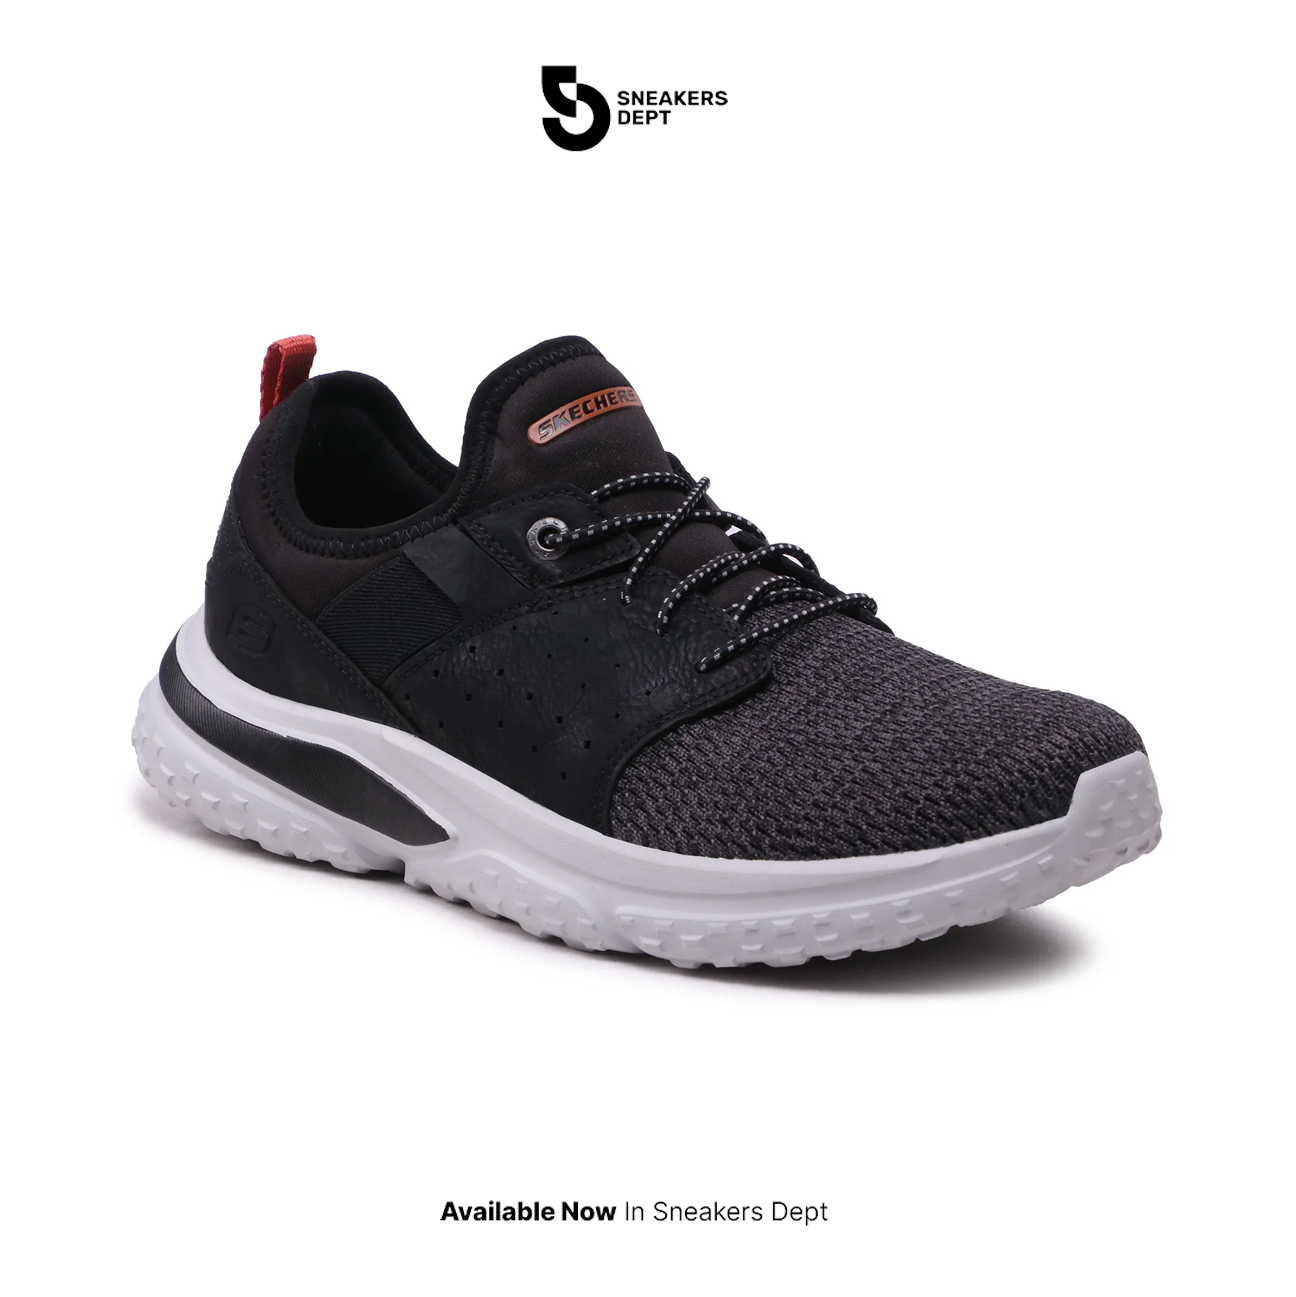 Sepatu Sneakers Pria SKECHERS SOLVANO CASPIAN 210553BLK ORIGINAL